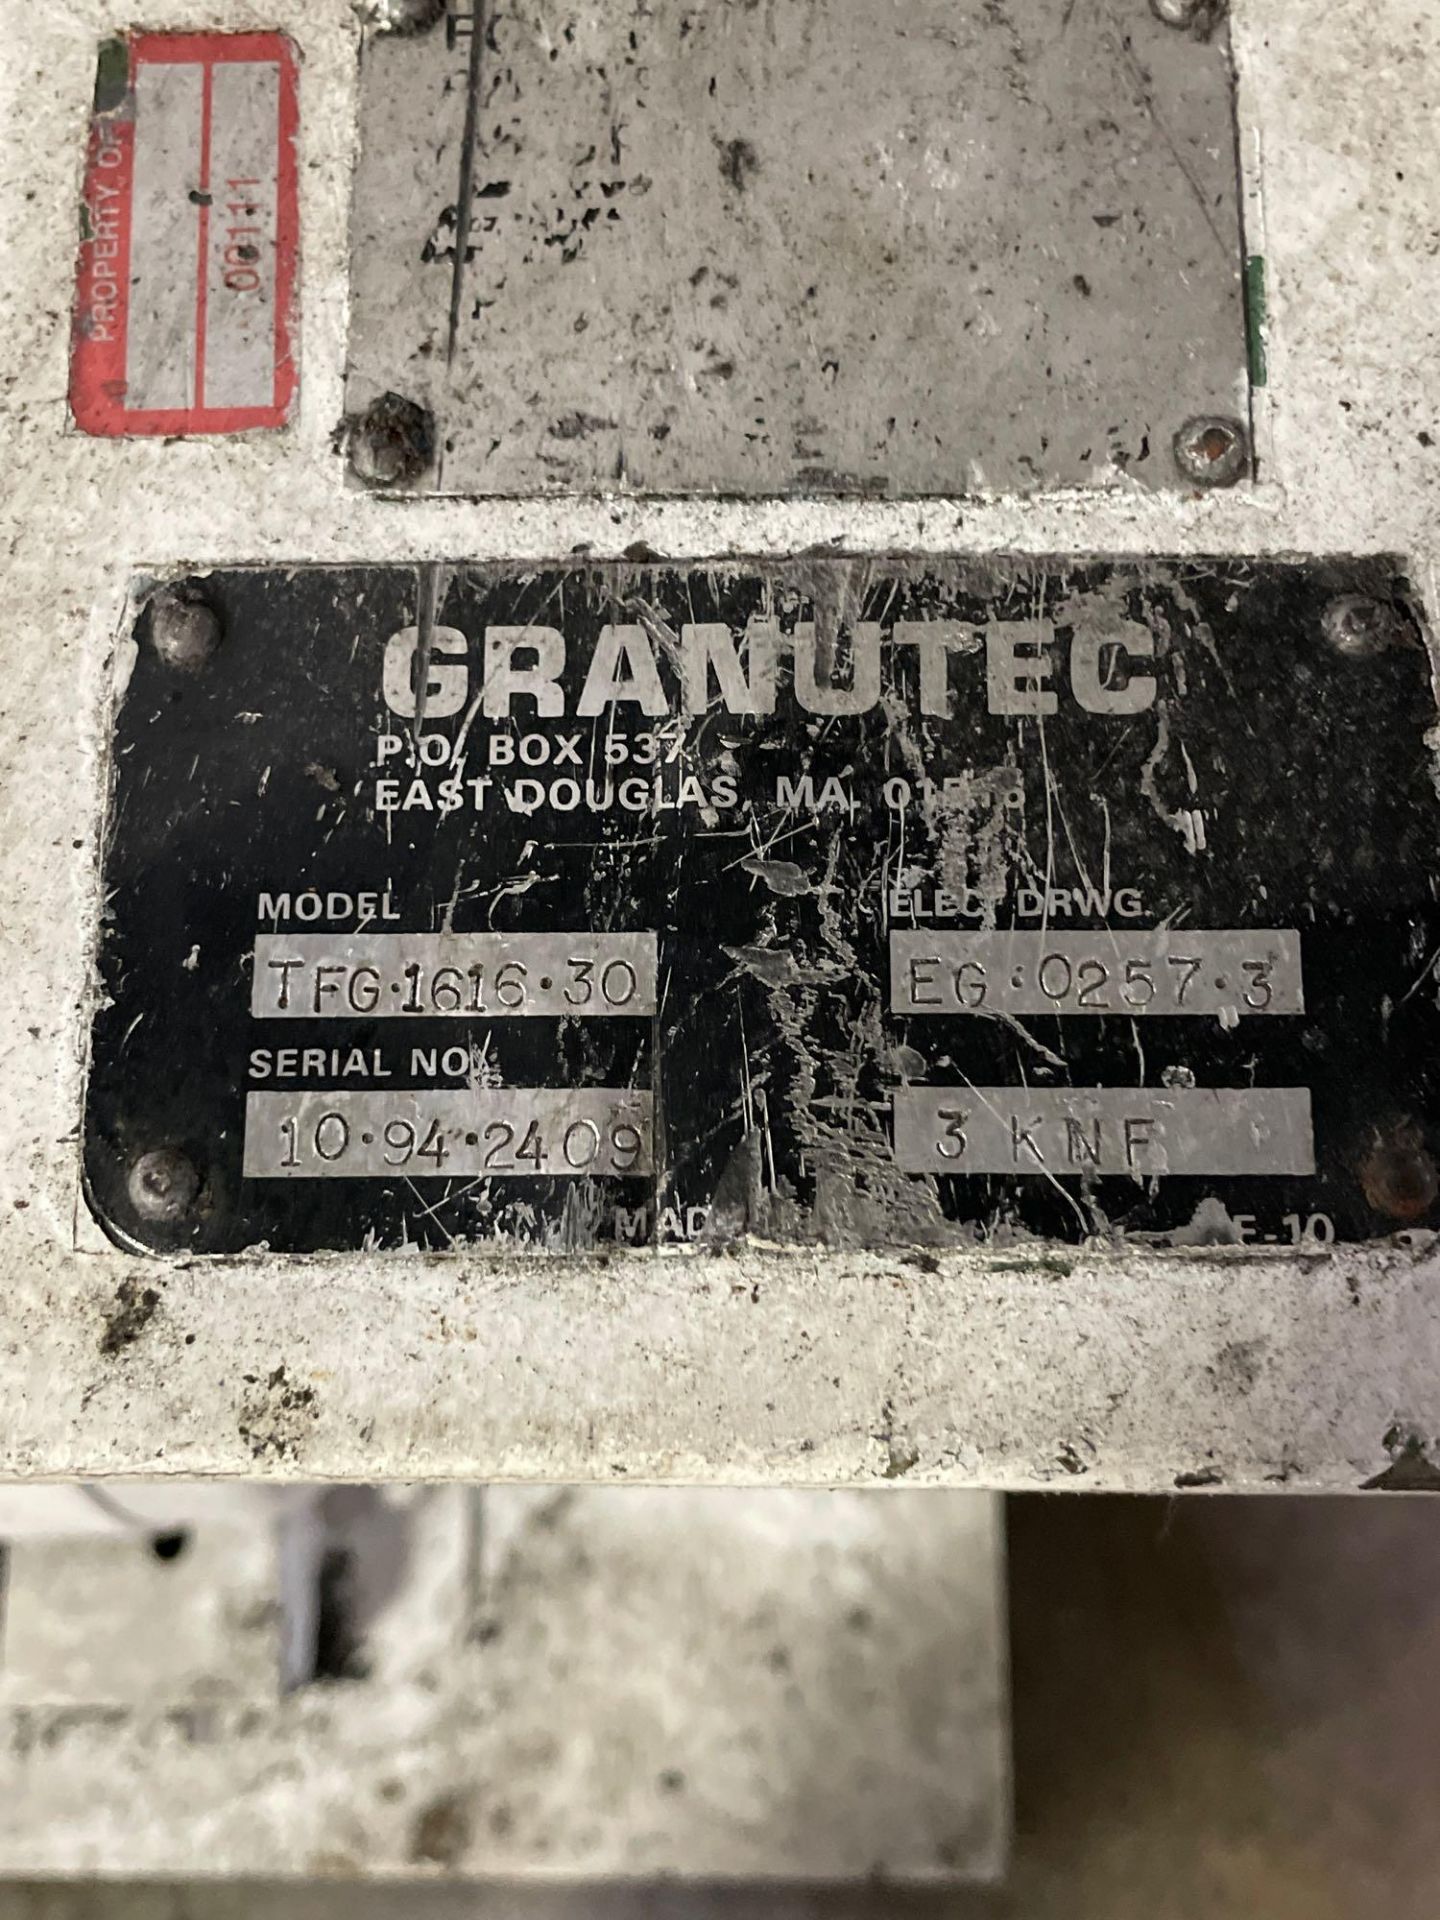 Granutec 30 HP Granulator Grinder m/n TFG 1616-30 s/n 997-3102 - Image 5 of 5